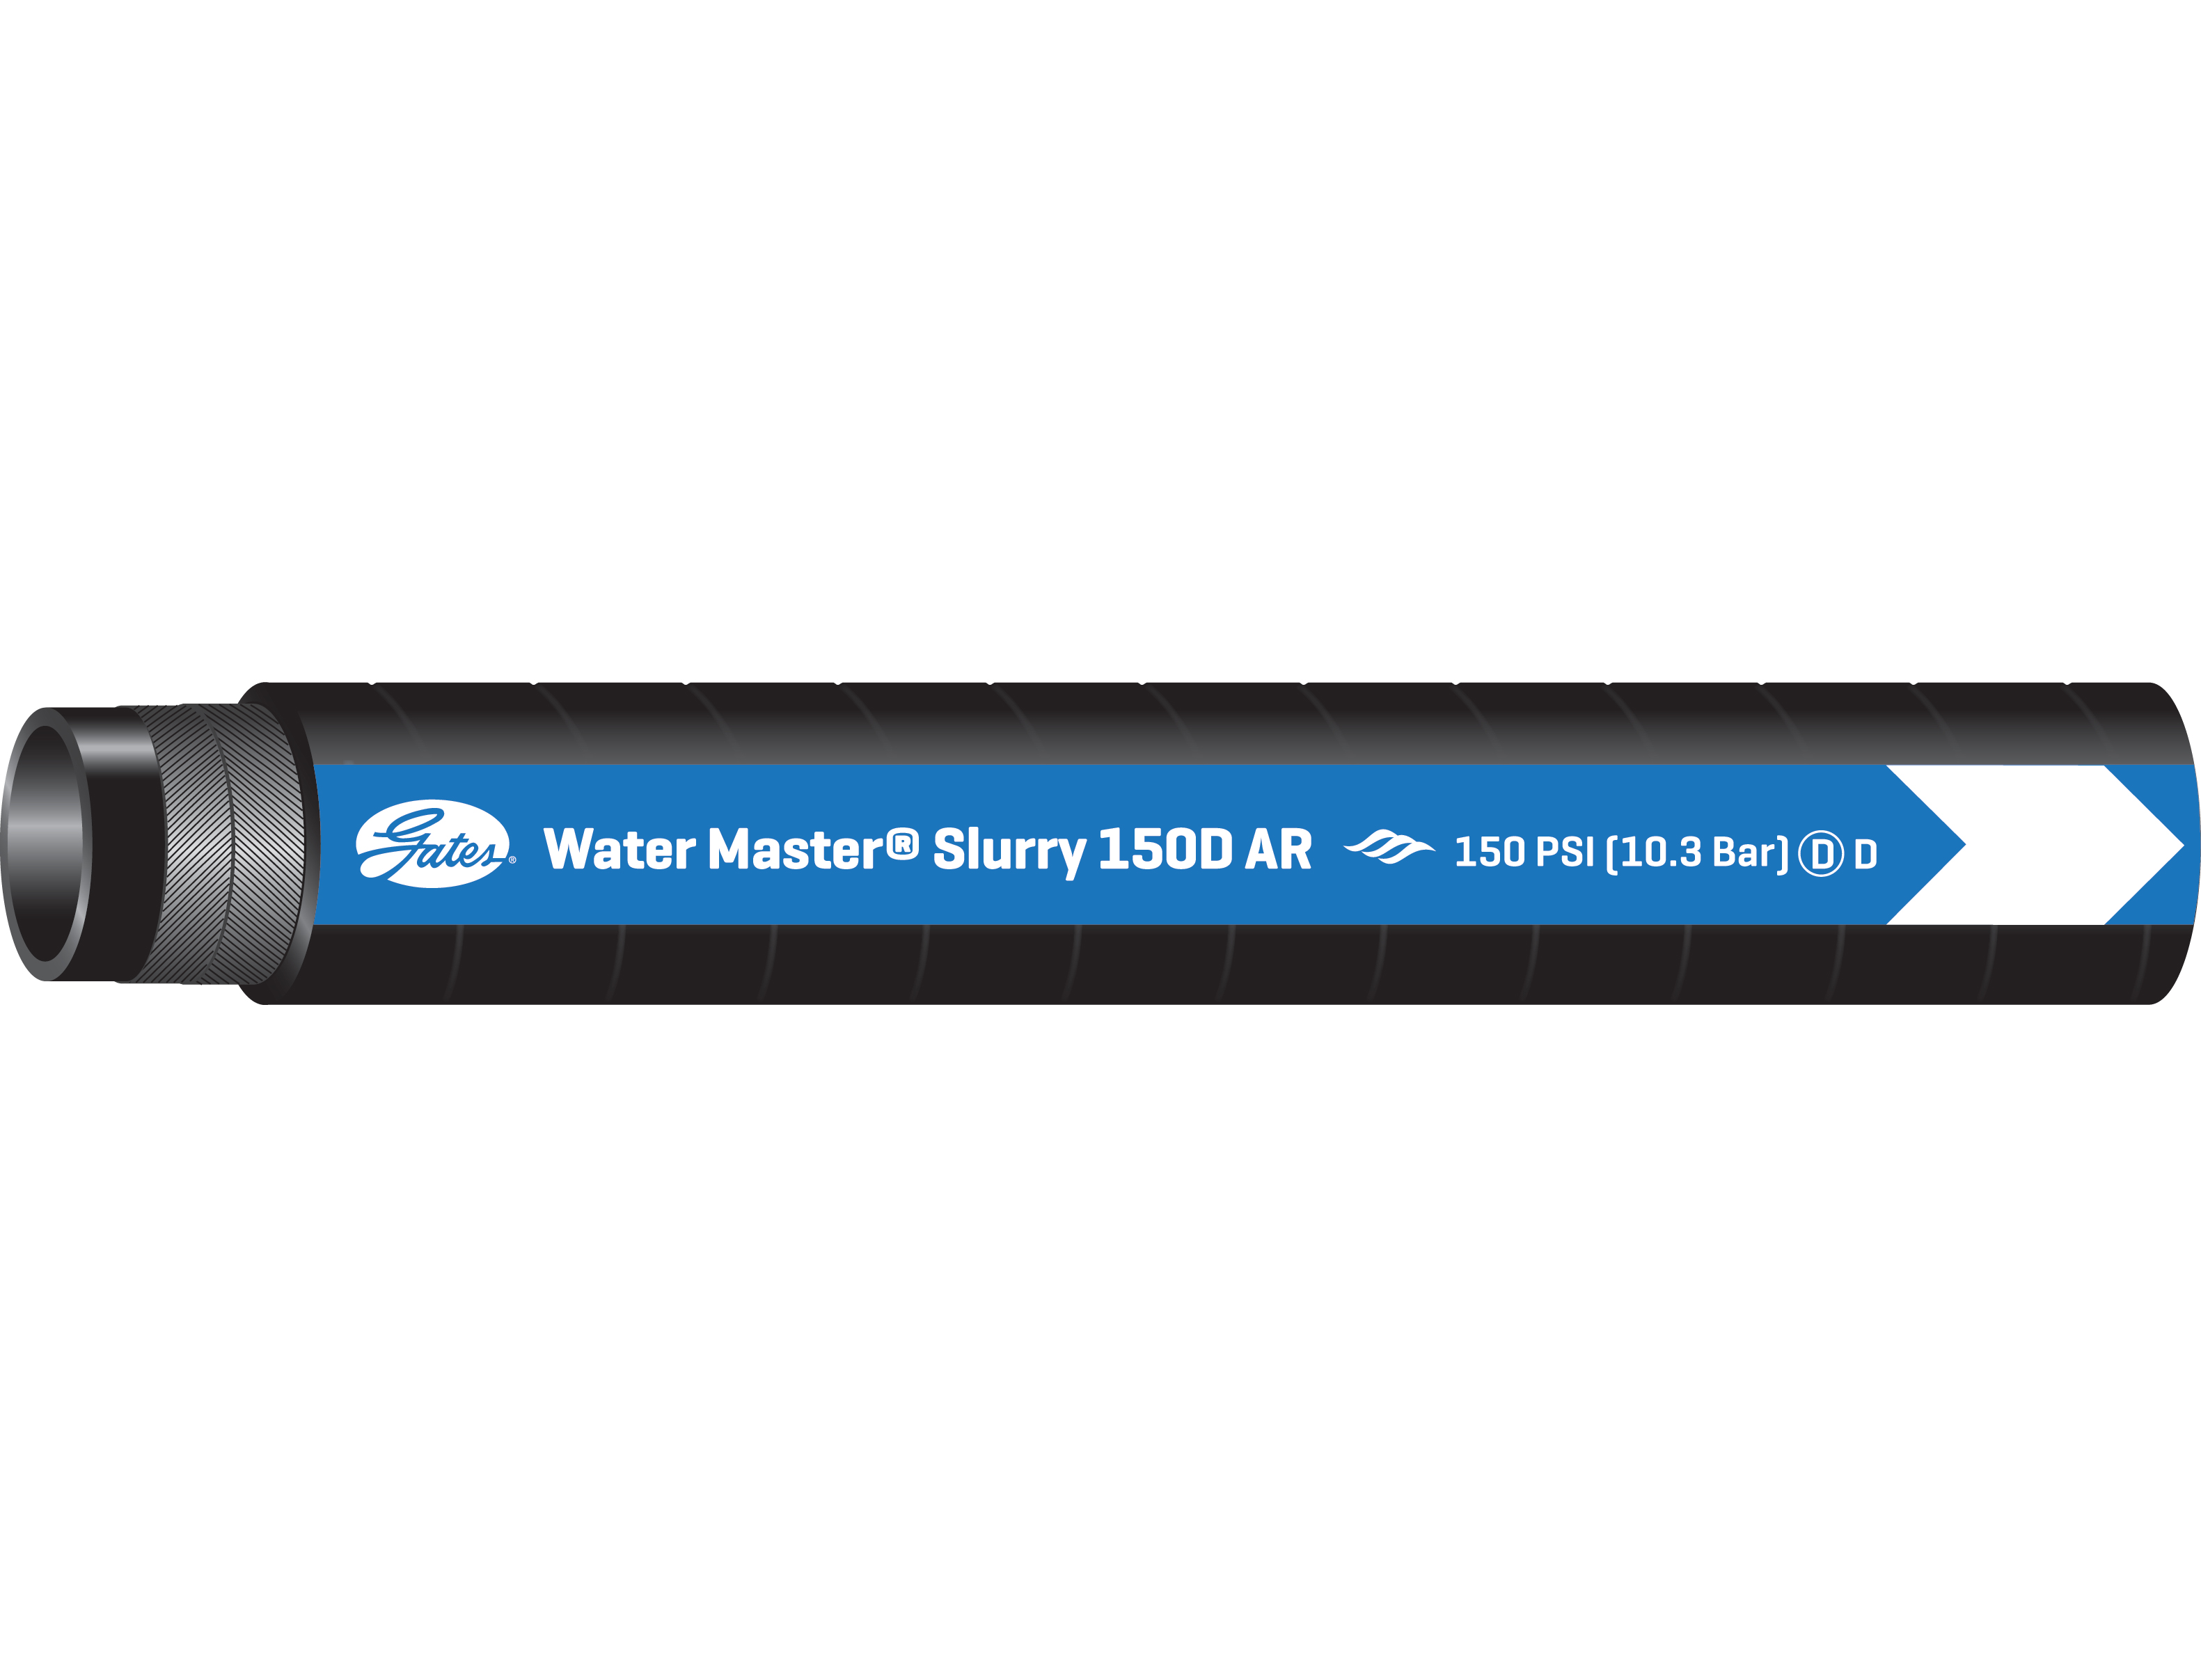 Water Master Slurry 150D AR Heavy-Duty Discharge Hose